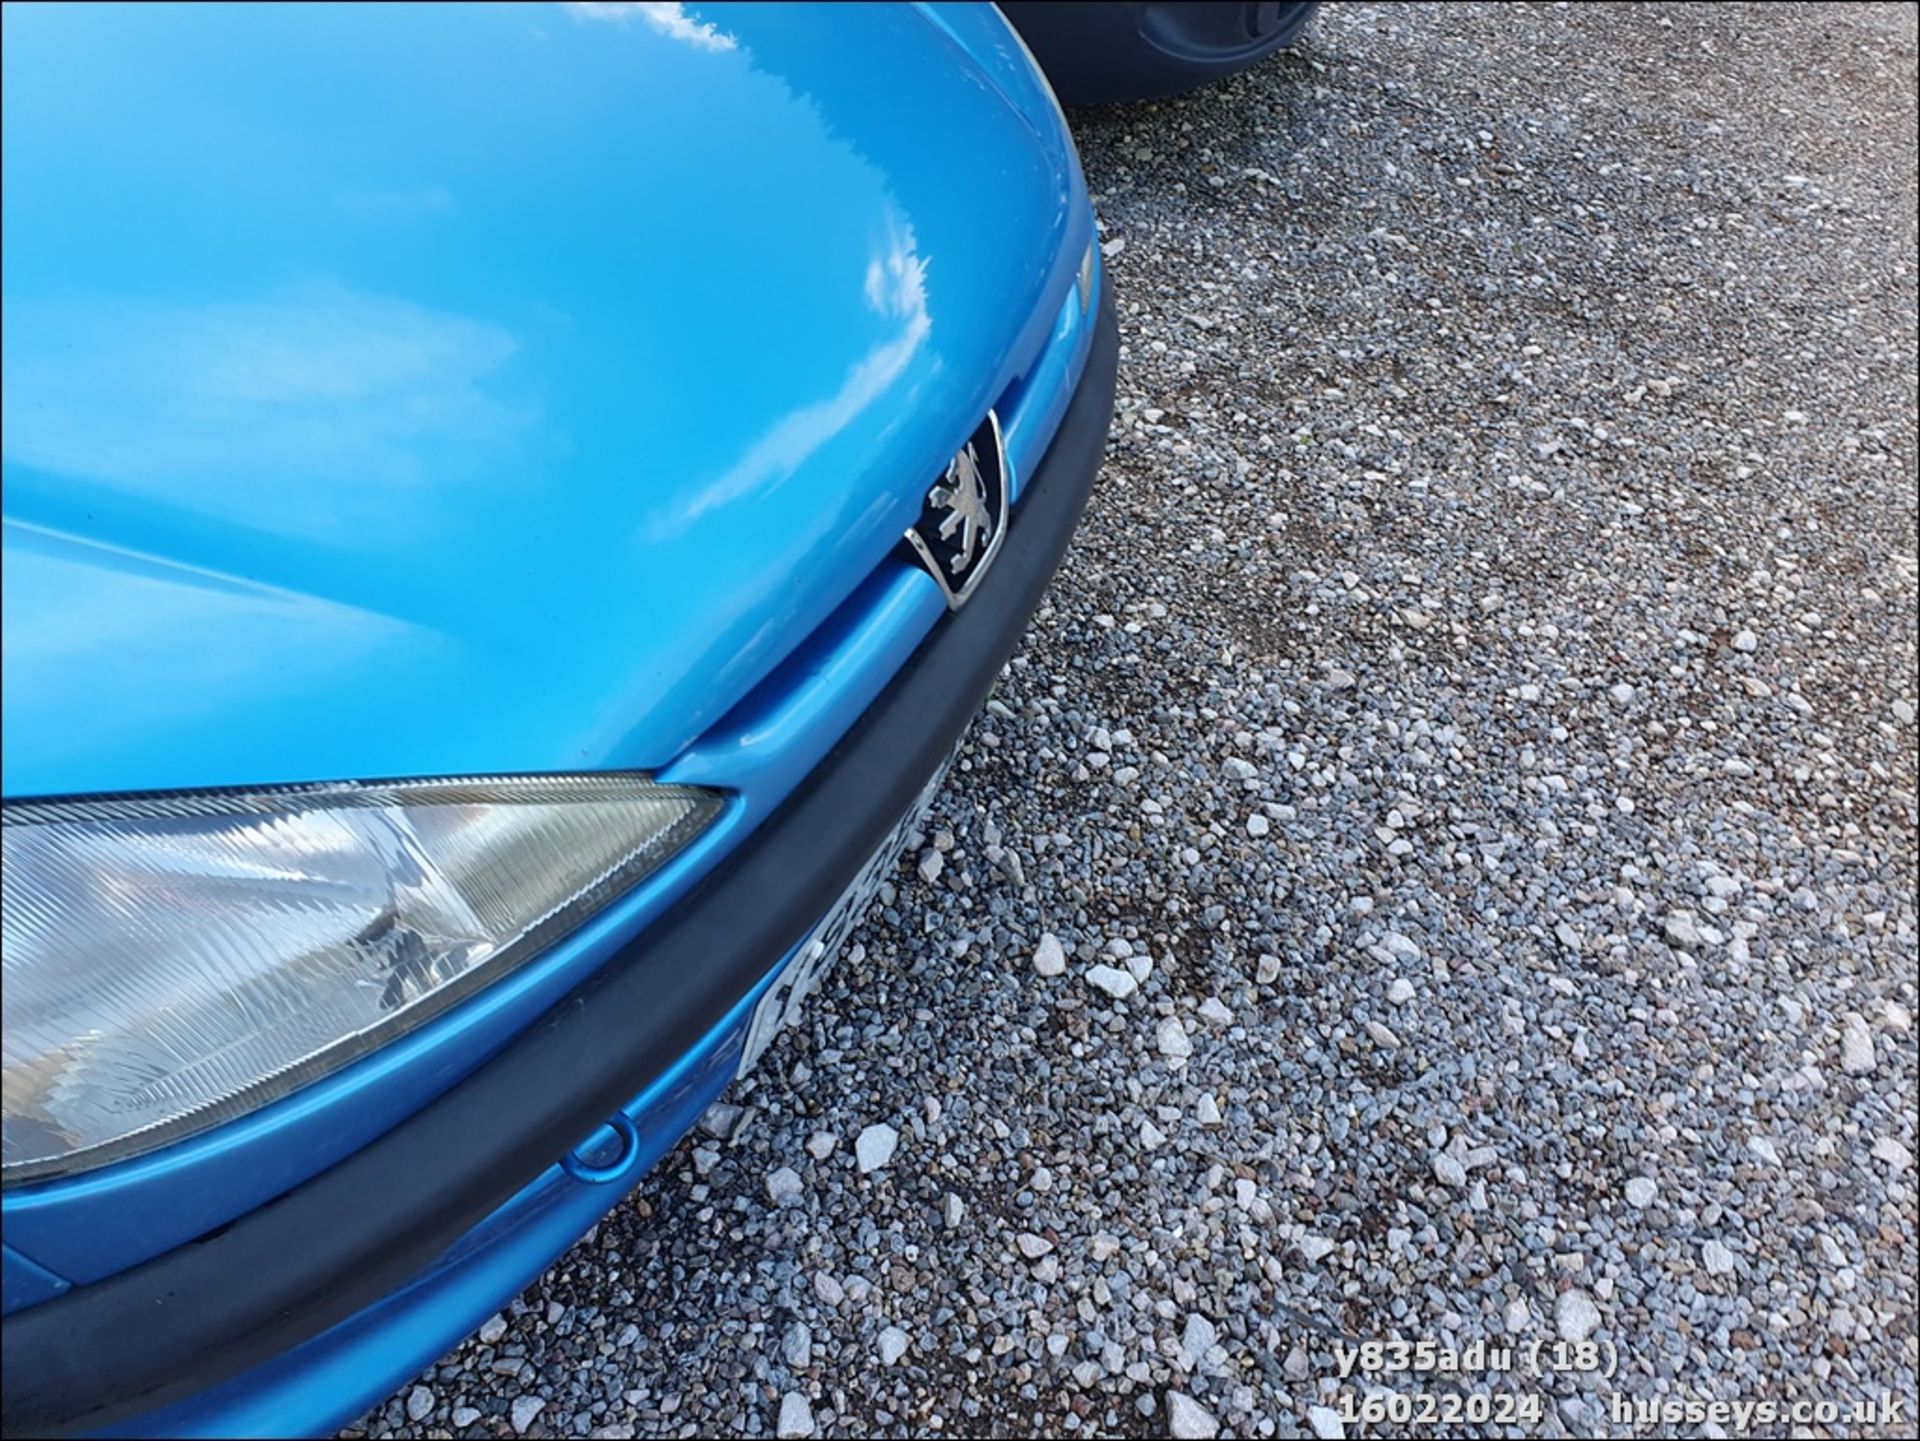 2001 PEUGEOT 206 LX AUTO - 1360cc 3dr Hatchback (Blue, 85k) - Image 19 of 22